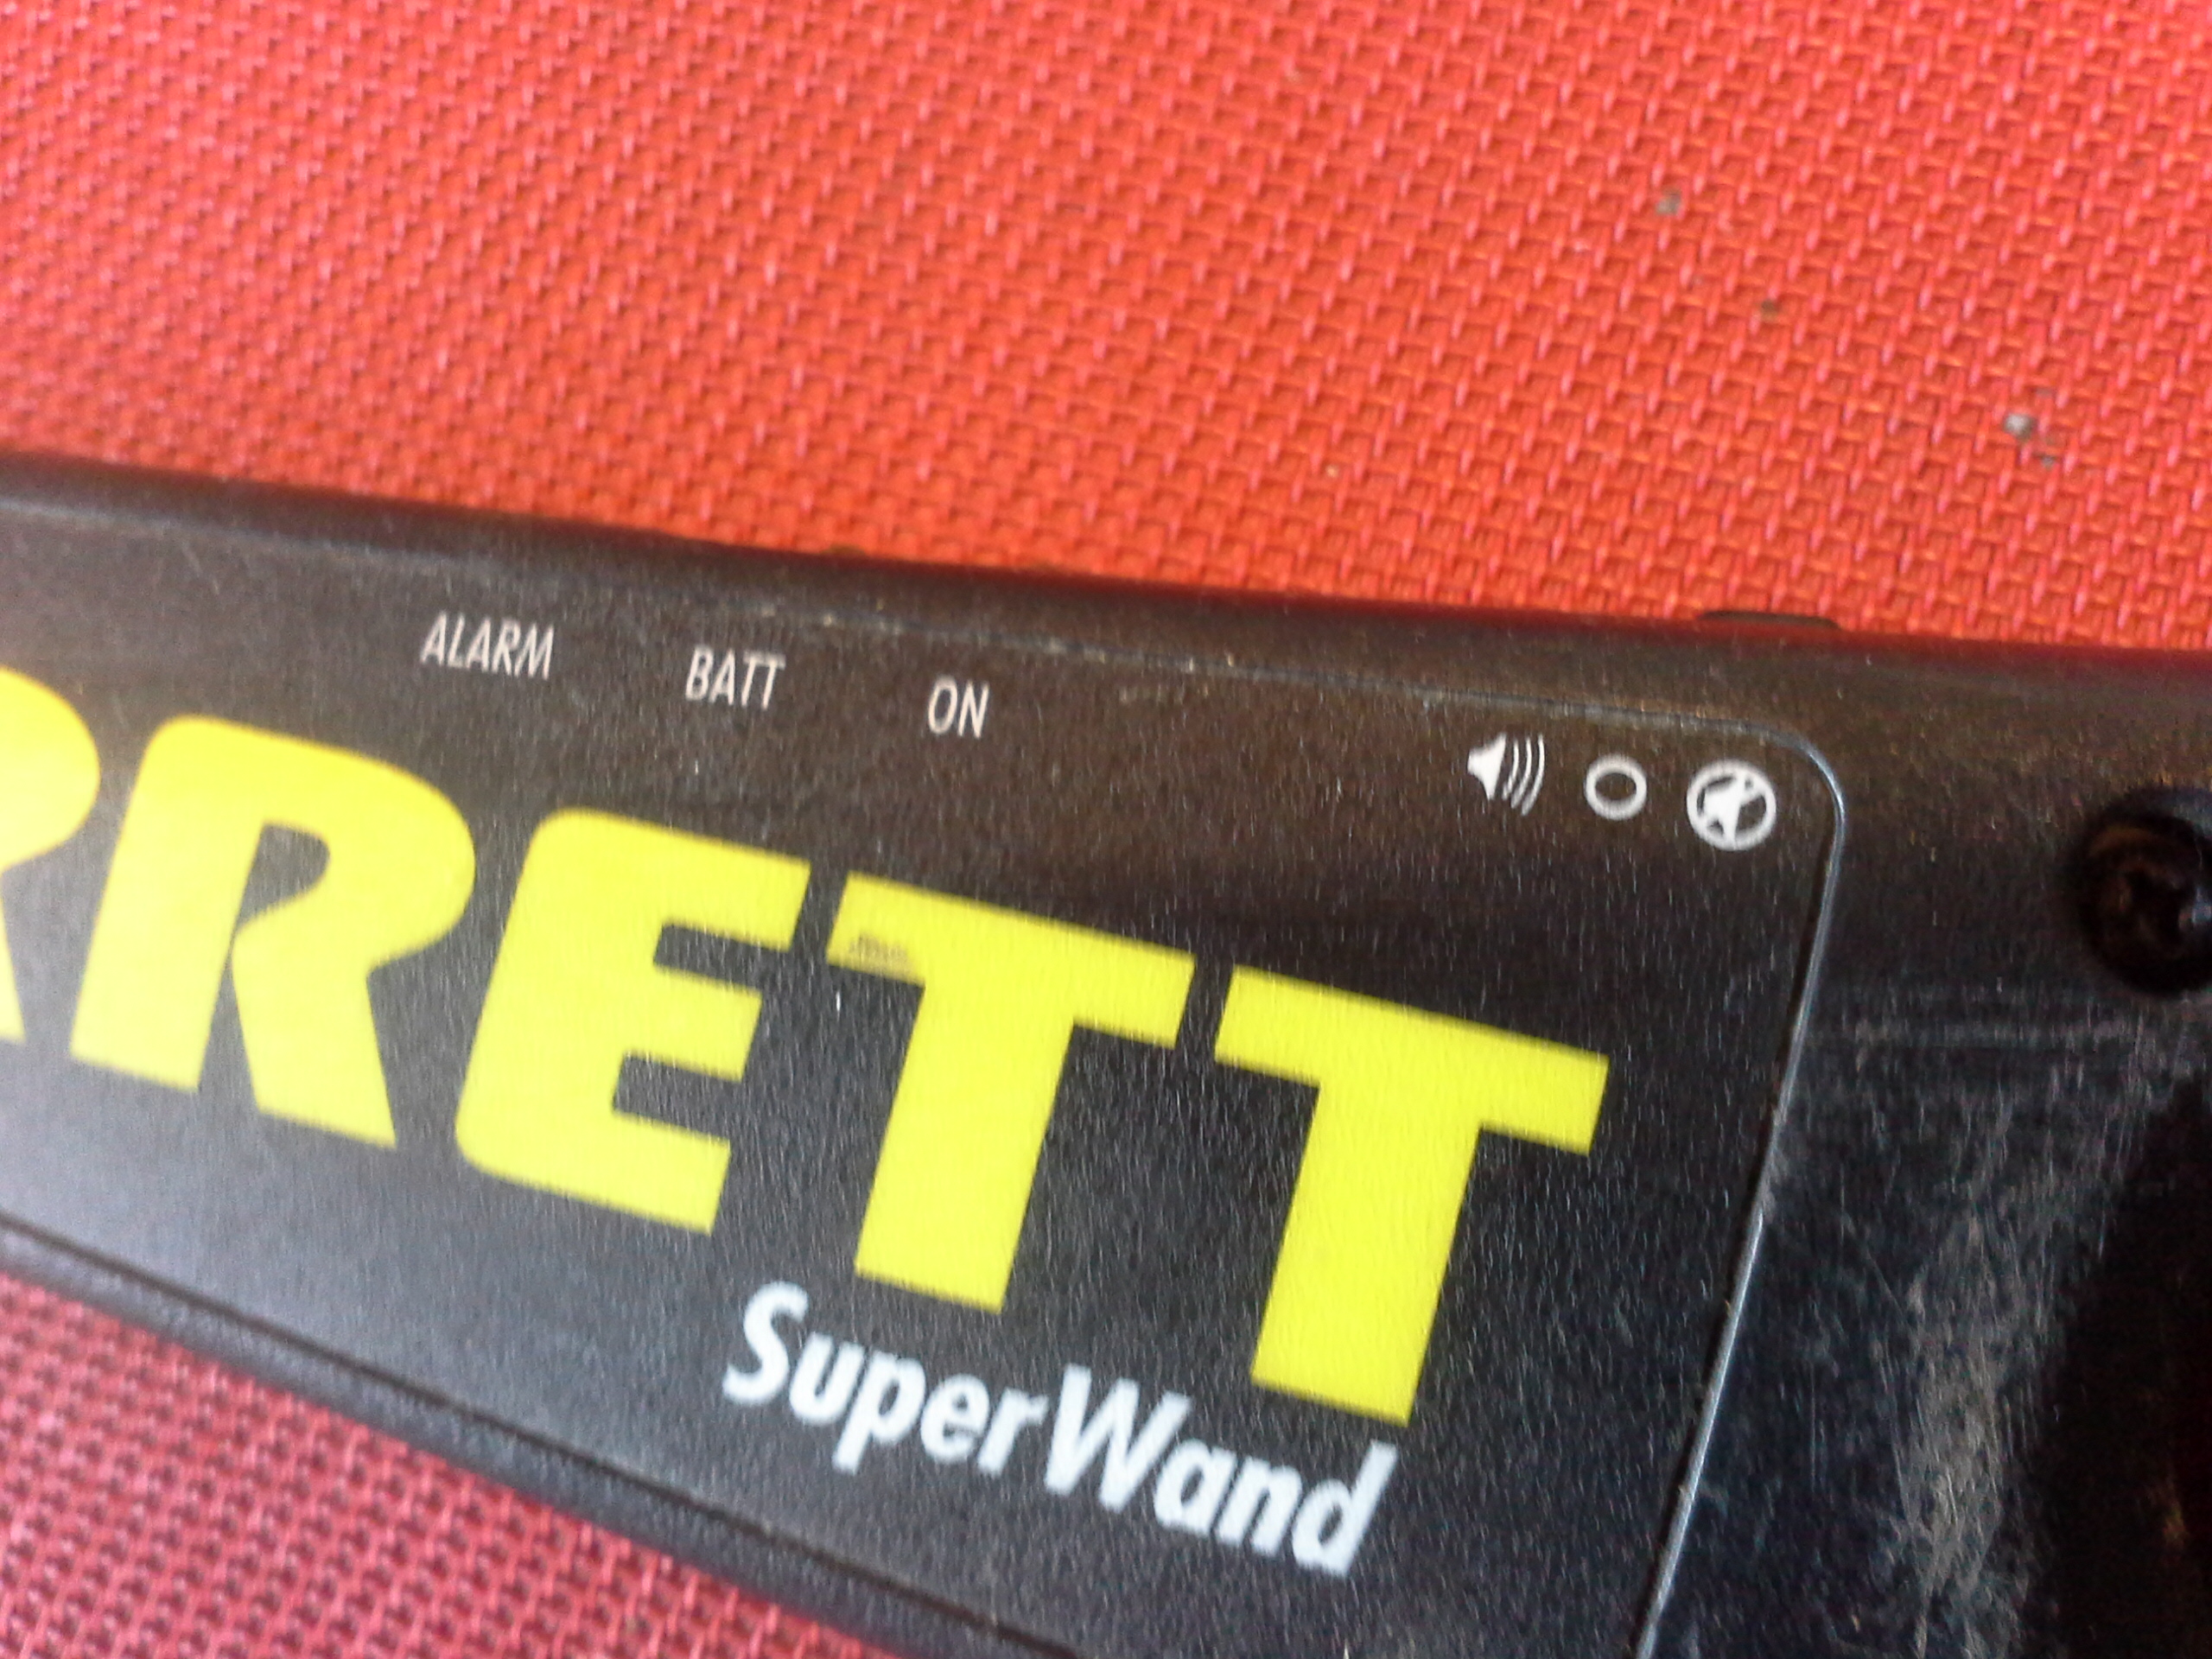 Garrett Super Wand Detector, Mod. 1165800